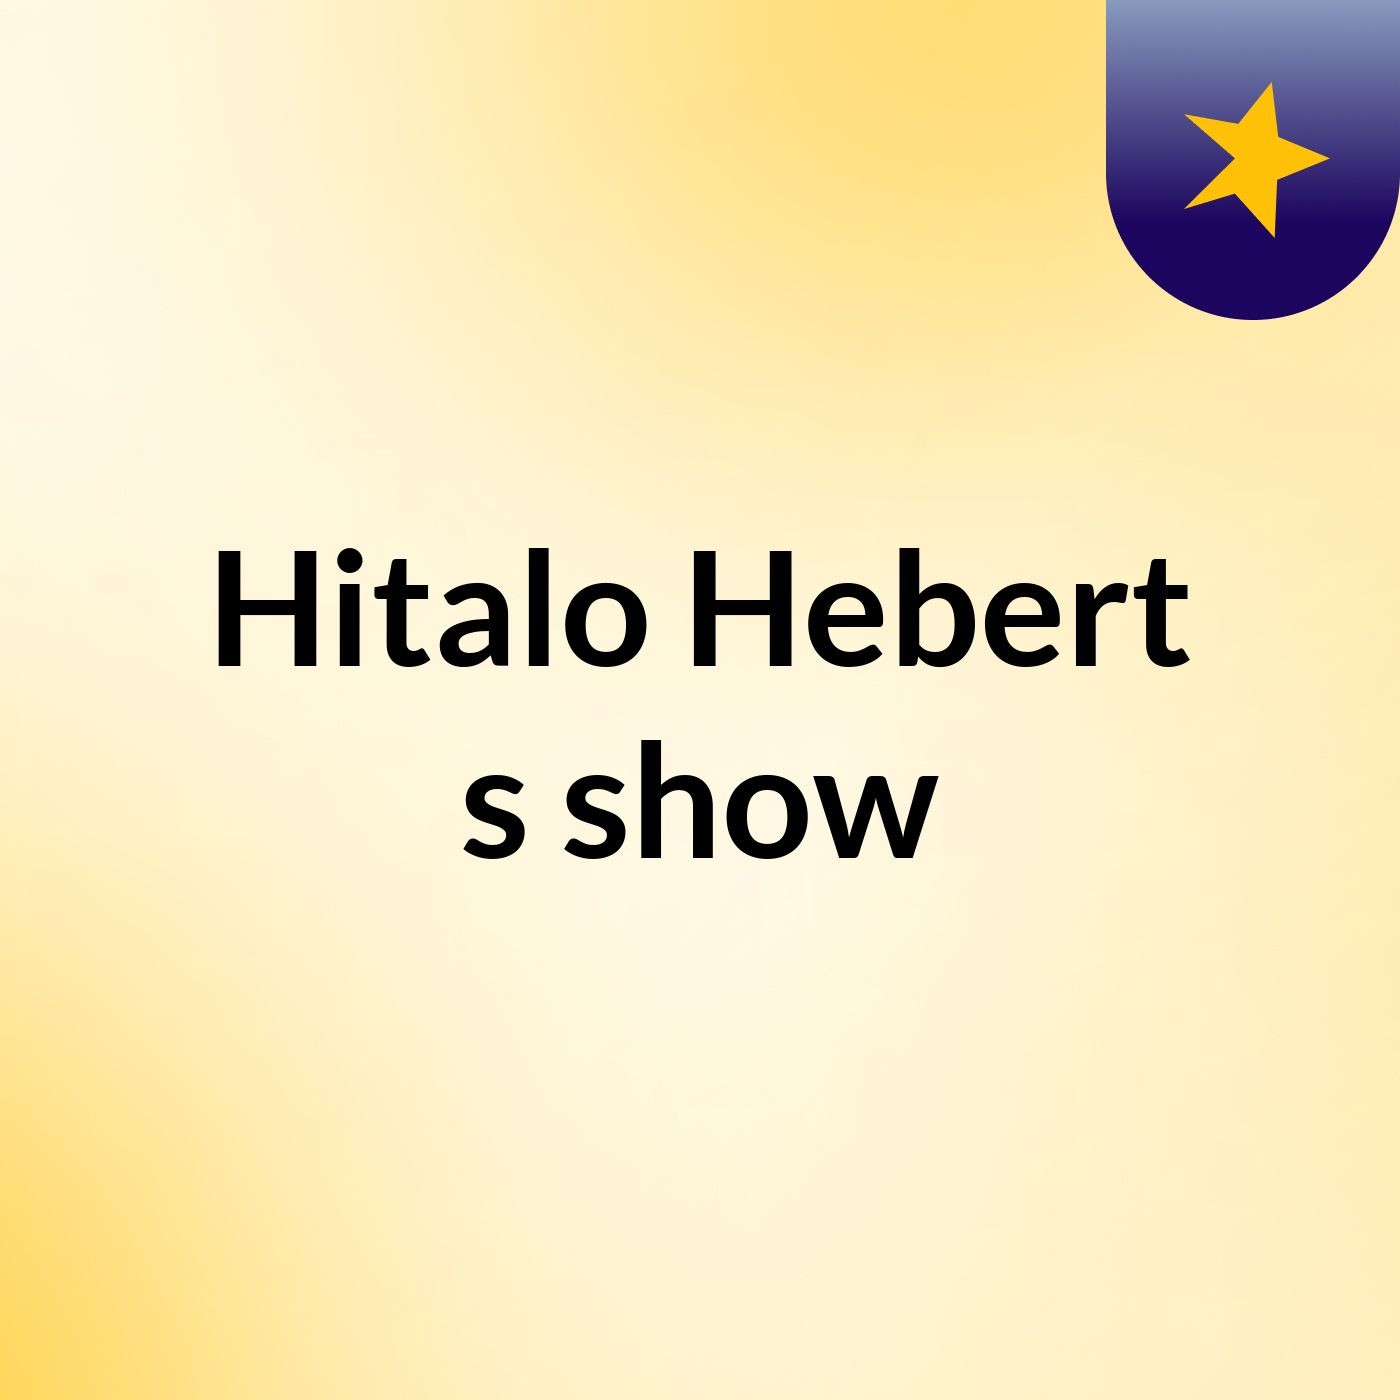 Hitalo Hebert's show